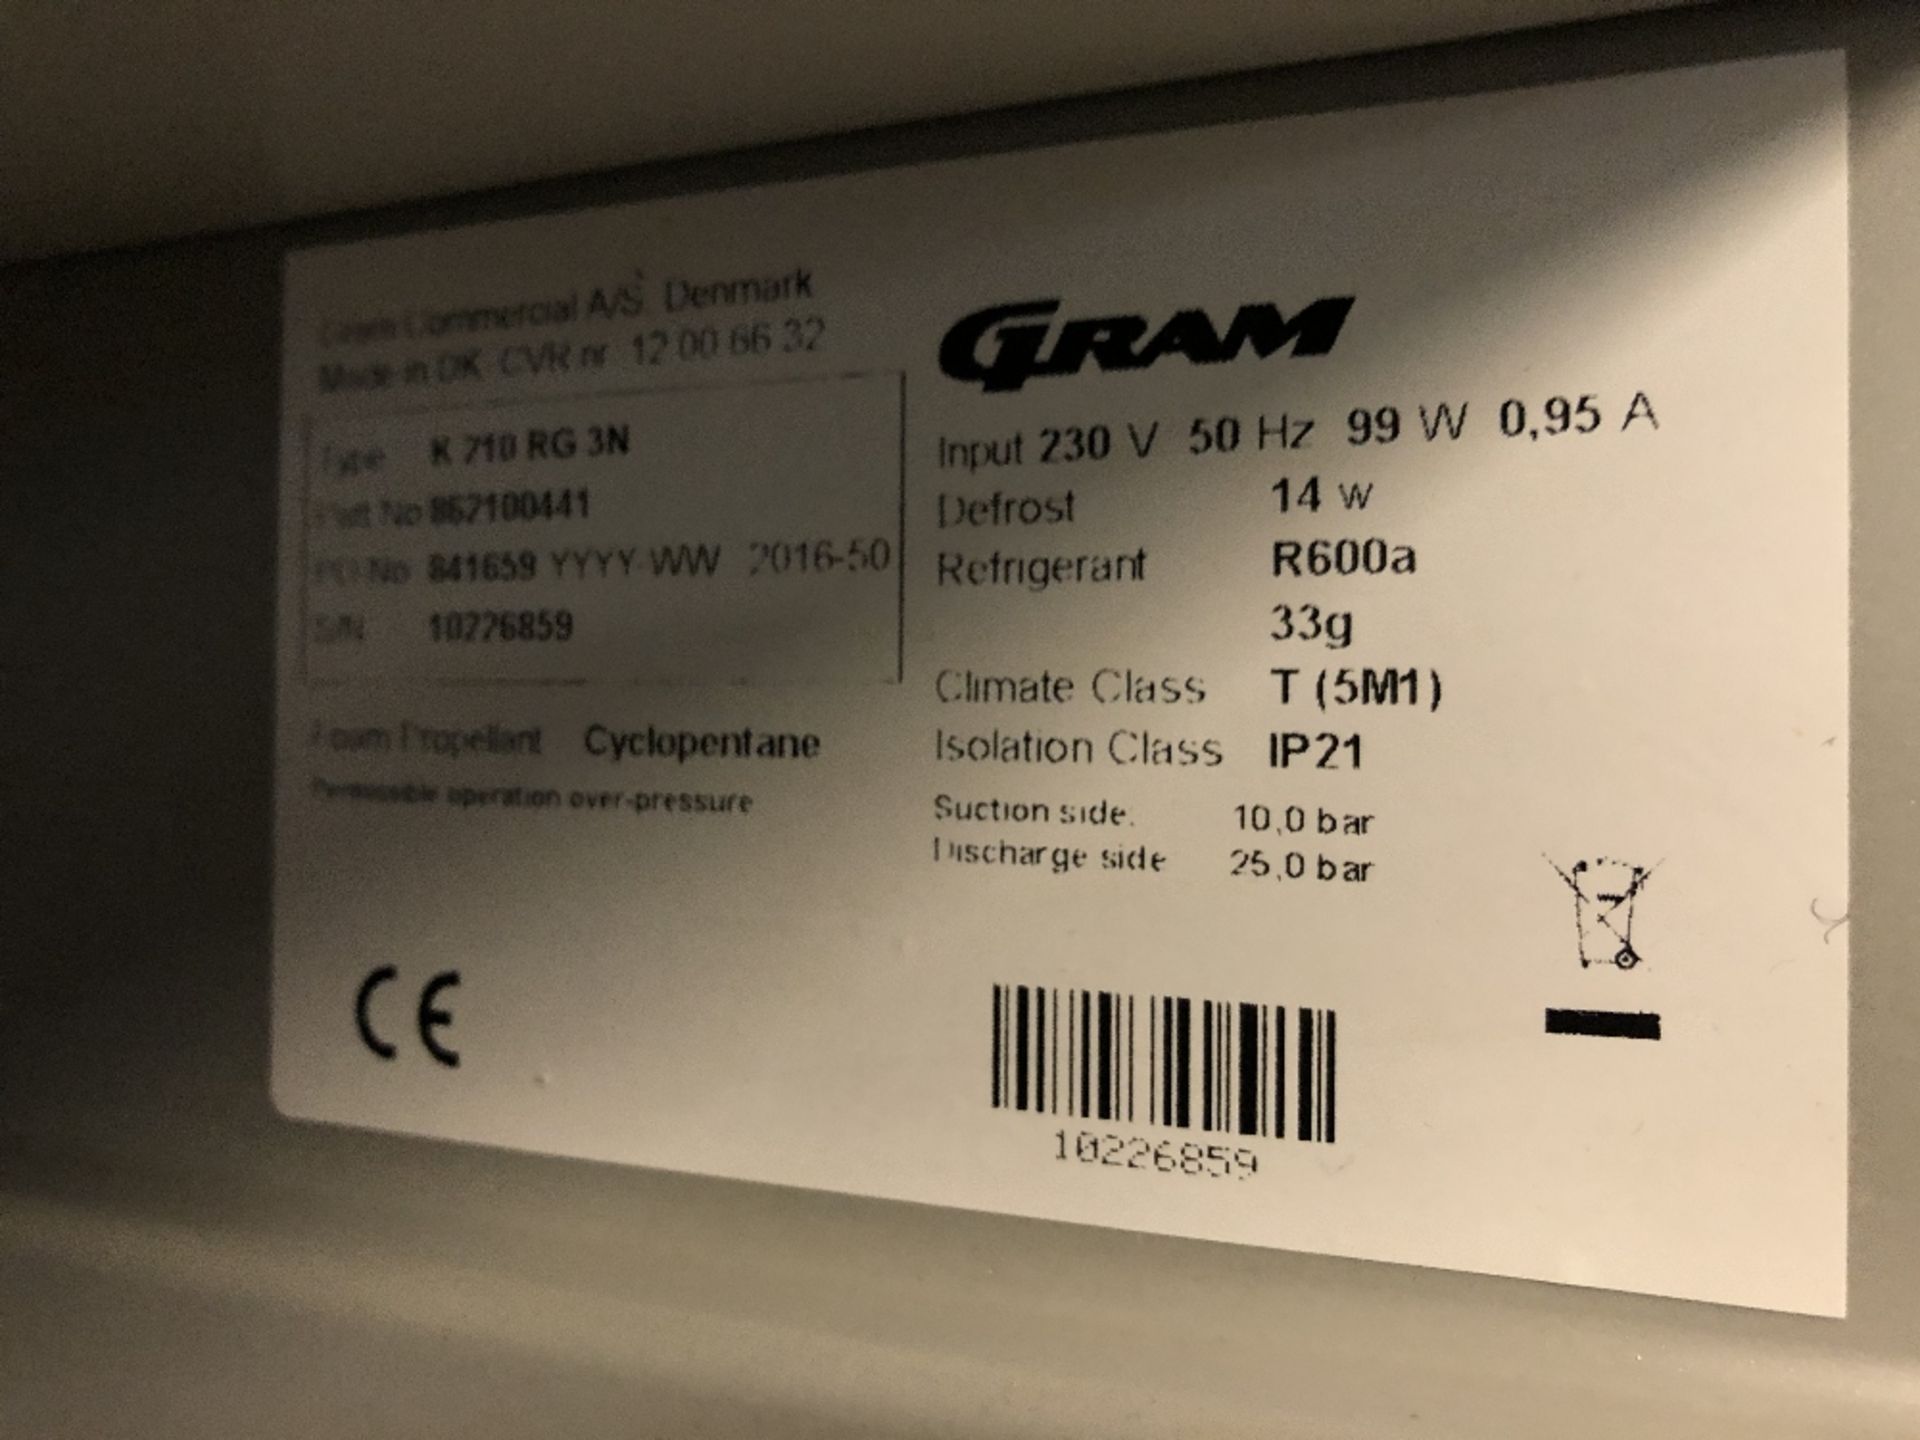 Gram F210 RG 3N Compact Single Door 125Ltr Stainless Steel Undercounter Freezer - Image 3 of 3